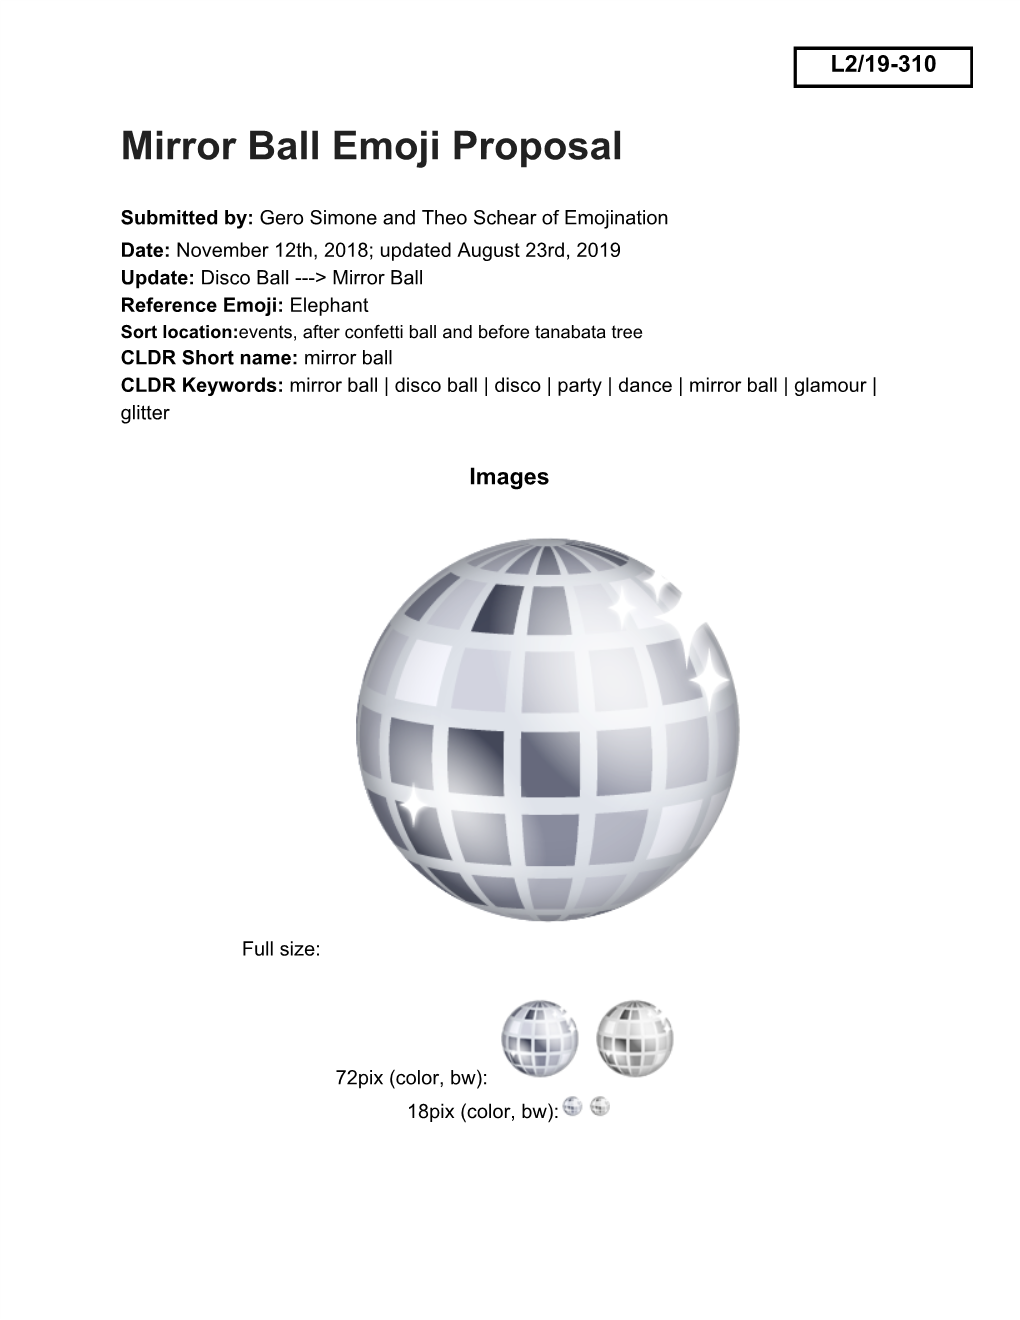 Mirror Ball Emoji Proposal